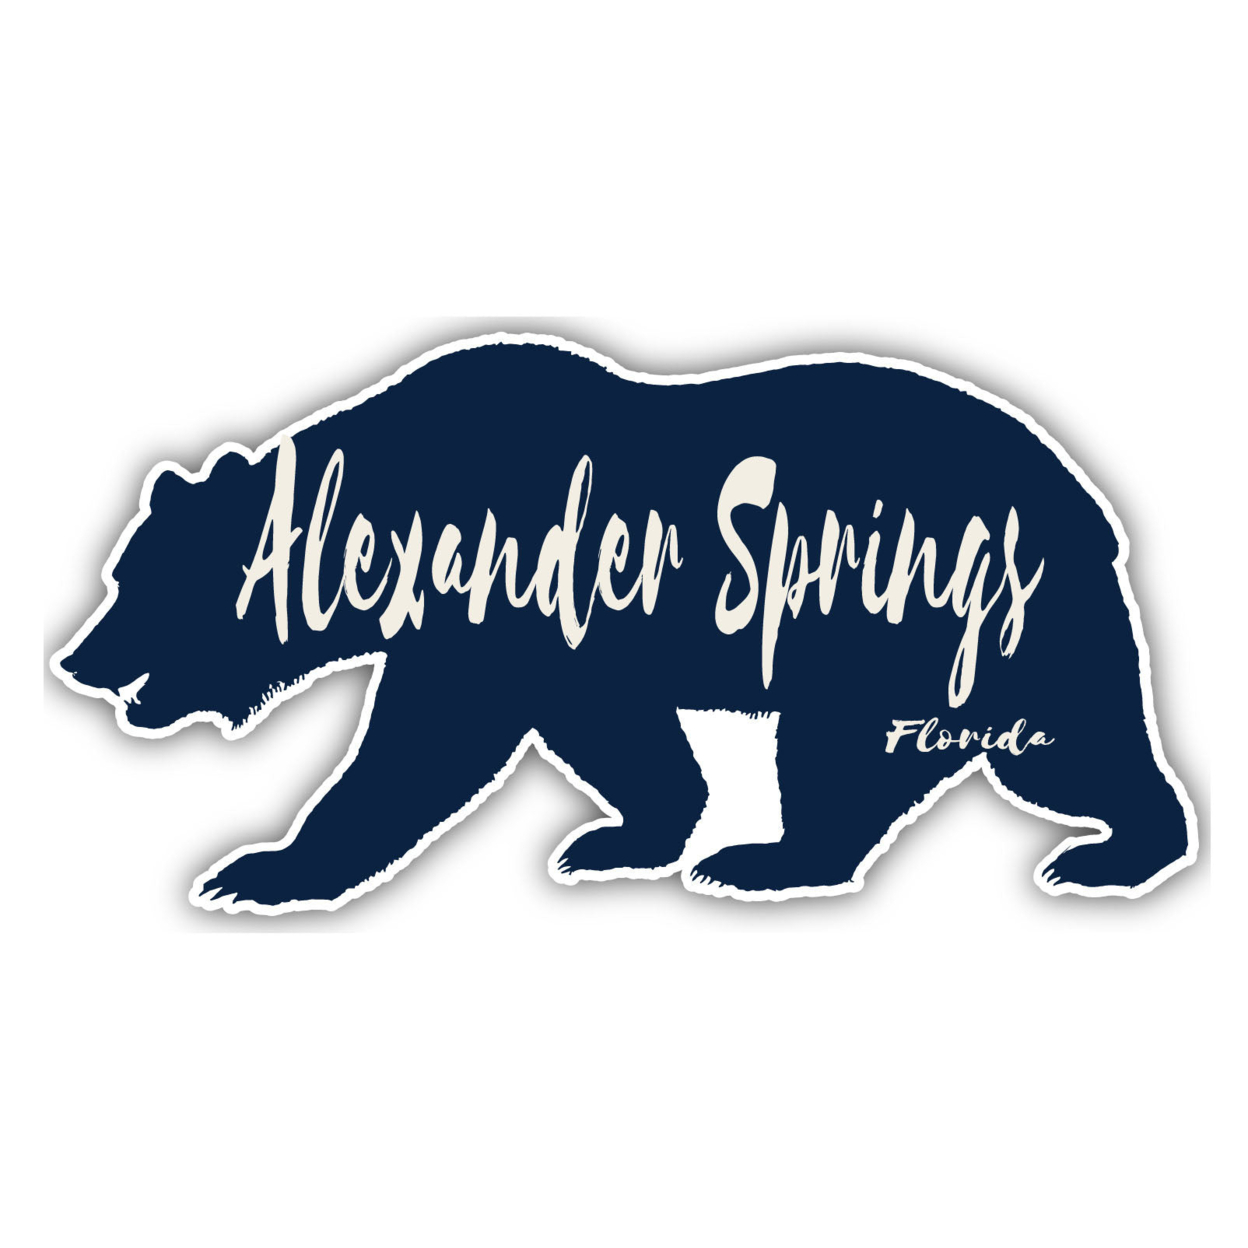 Alexander Springs Florida Souvenir Decorative Stickers (Choose Theme And Size) - Single Unit, 10-Inch, Tent